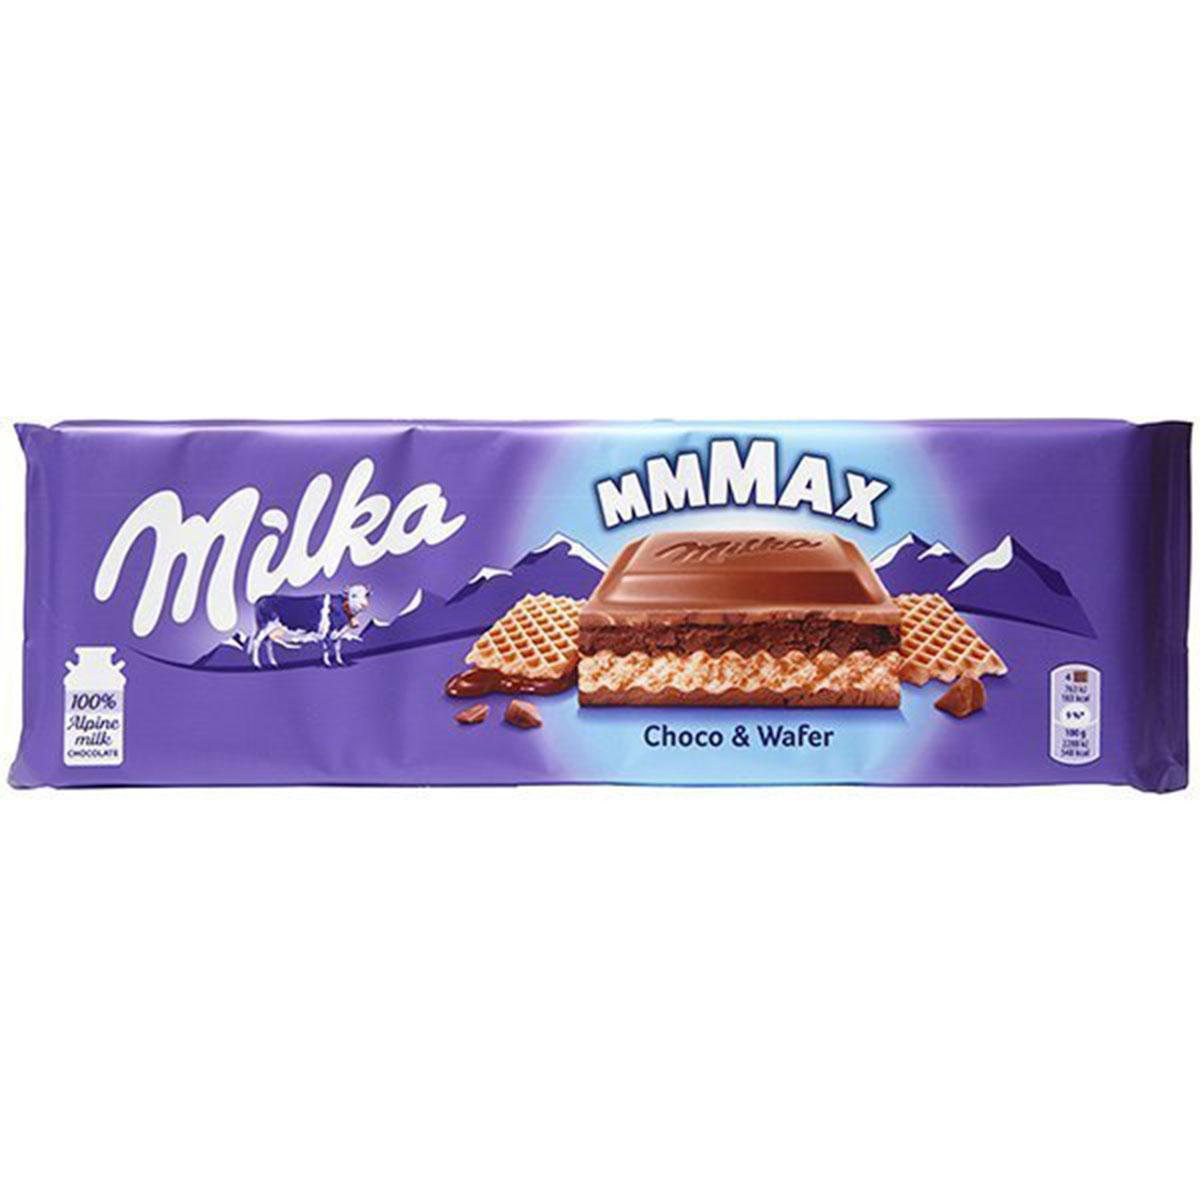 Choco wafer. Милка Choco Wafer 150гр. Milka Choco Wafer 300 гр. Milka MMMAX 300 гр. Шоколад "Milka Choco Wafer" 300гр Швейцария.